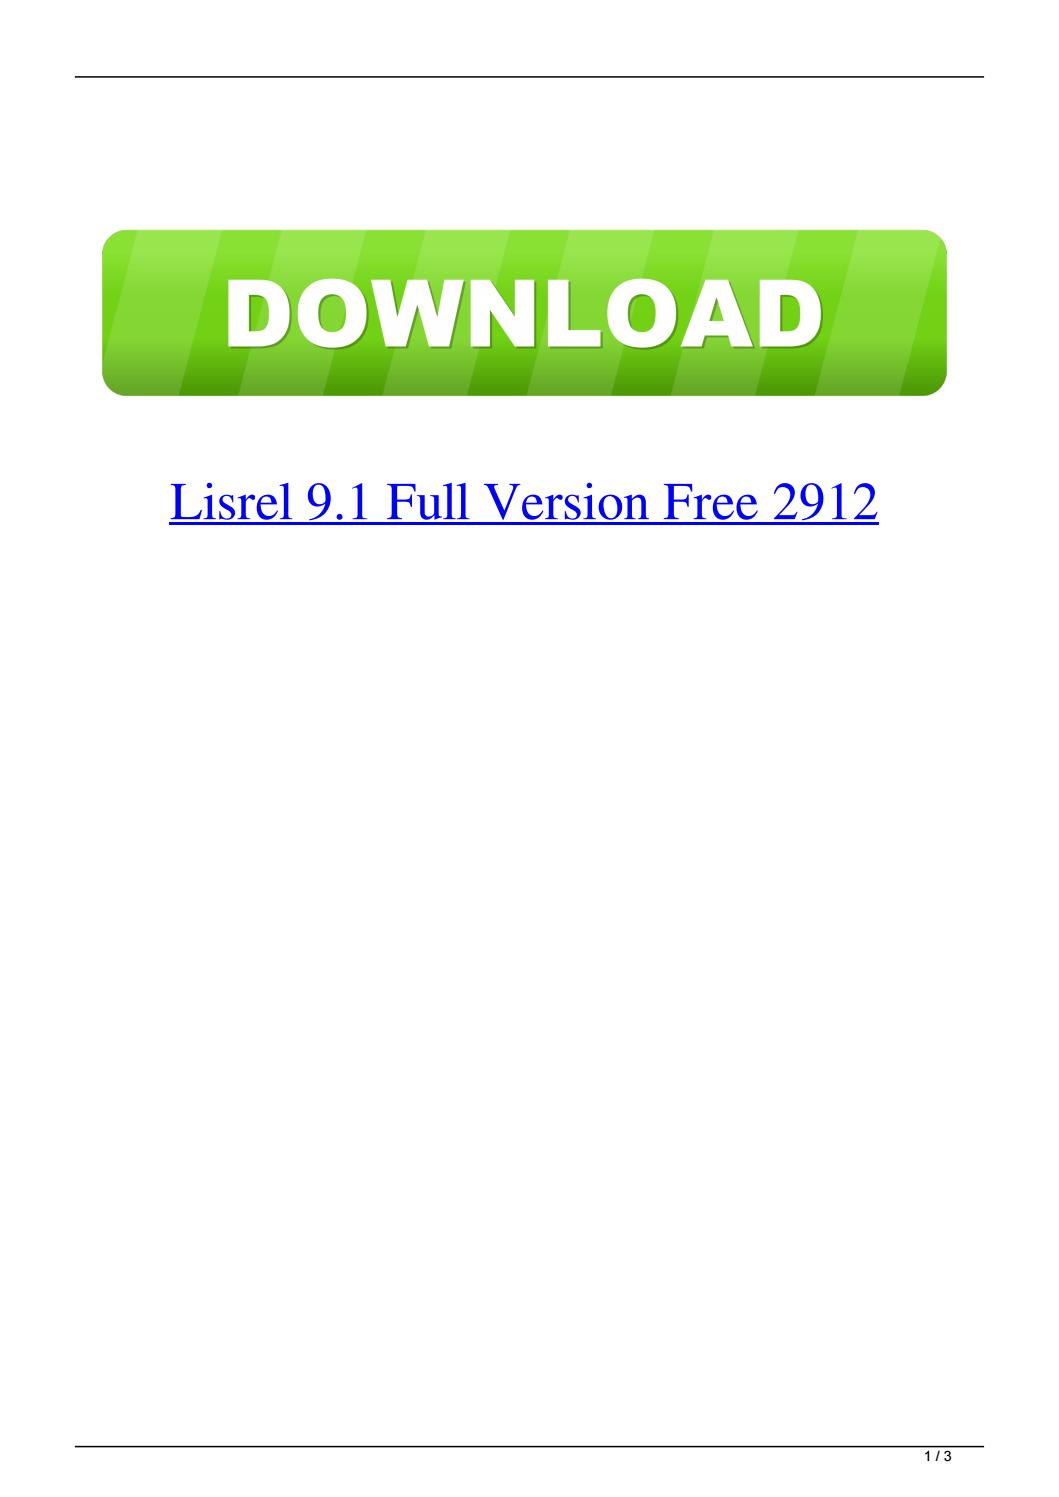 download aplikasi lisrel 8.80